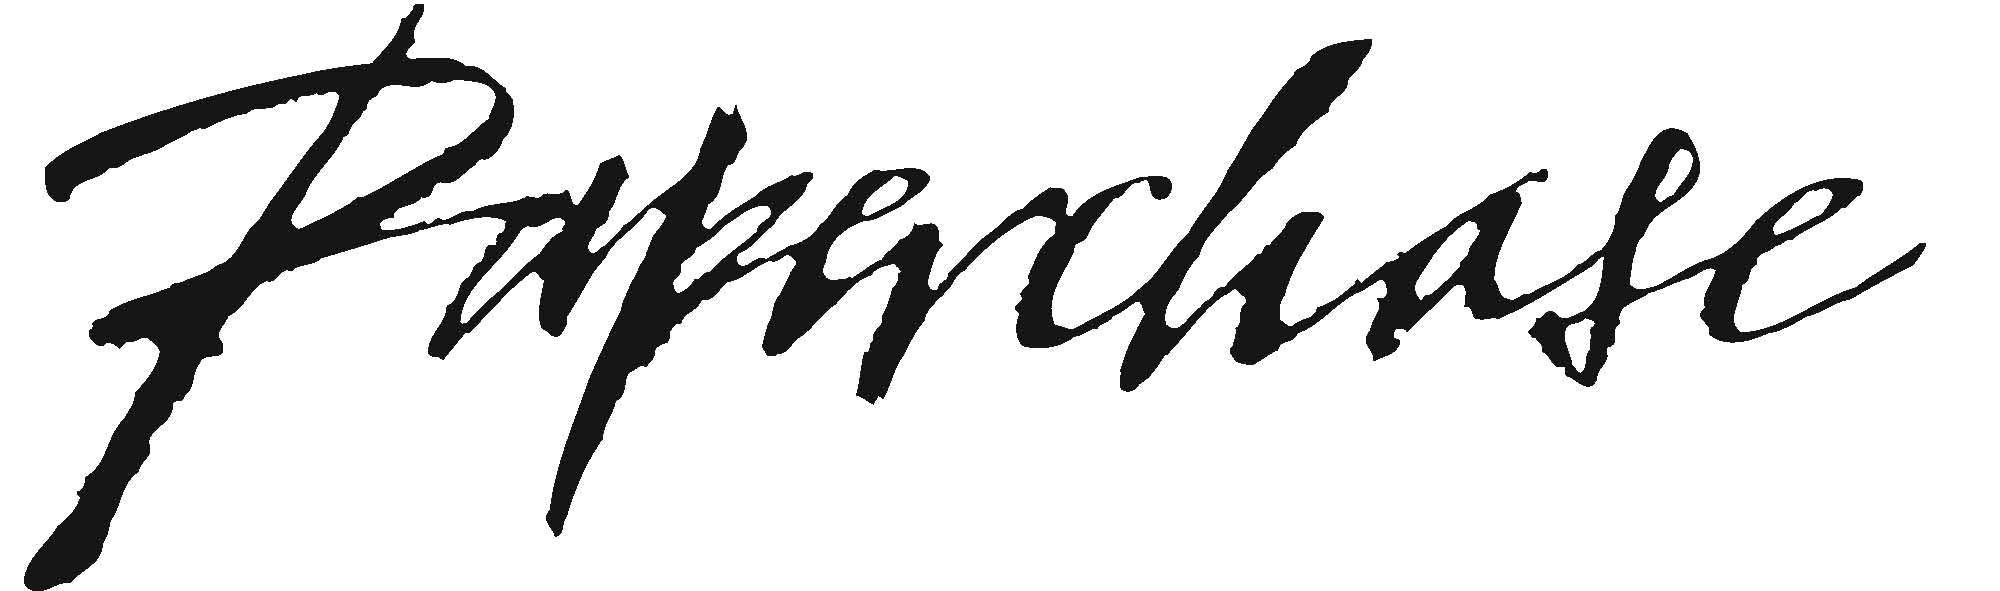 paperchase-logo